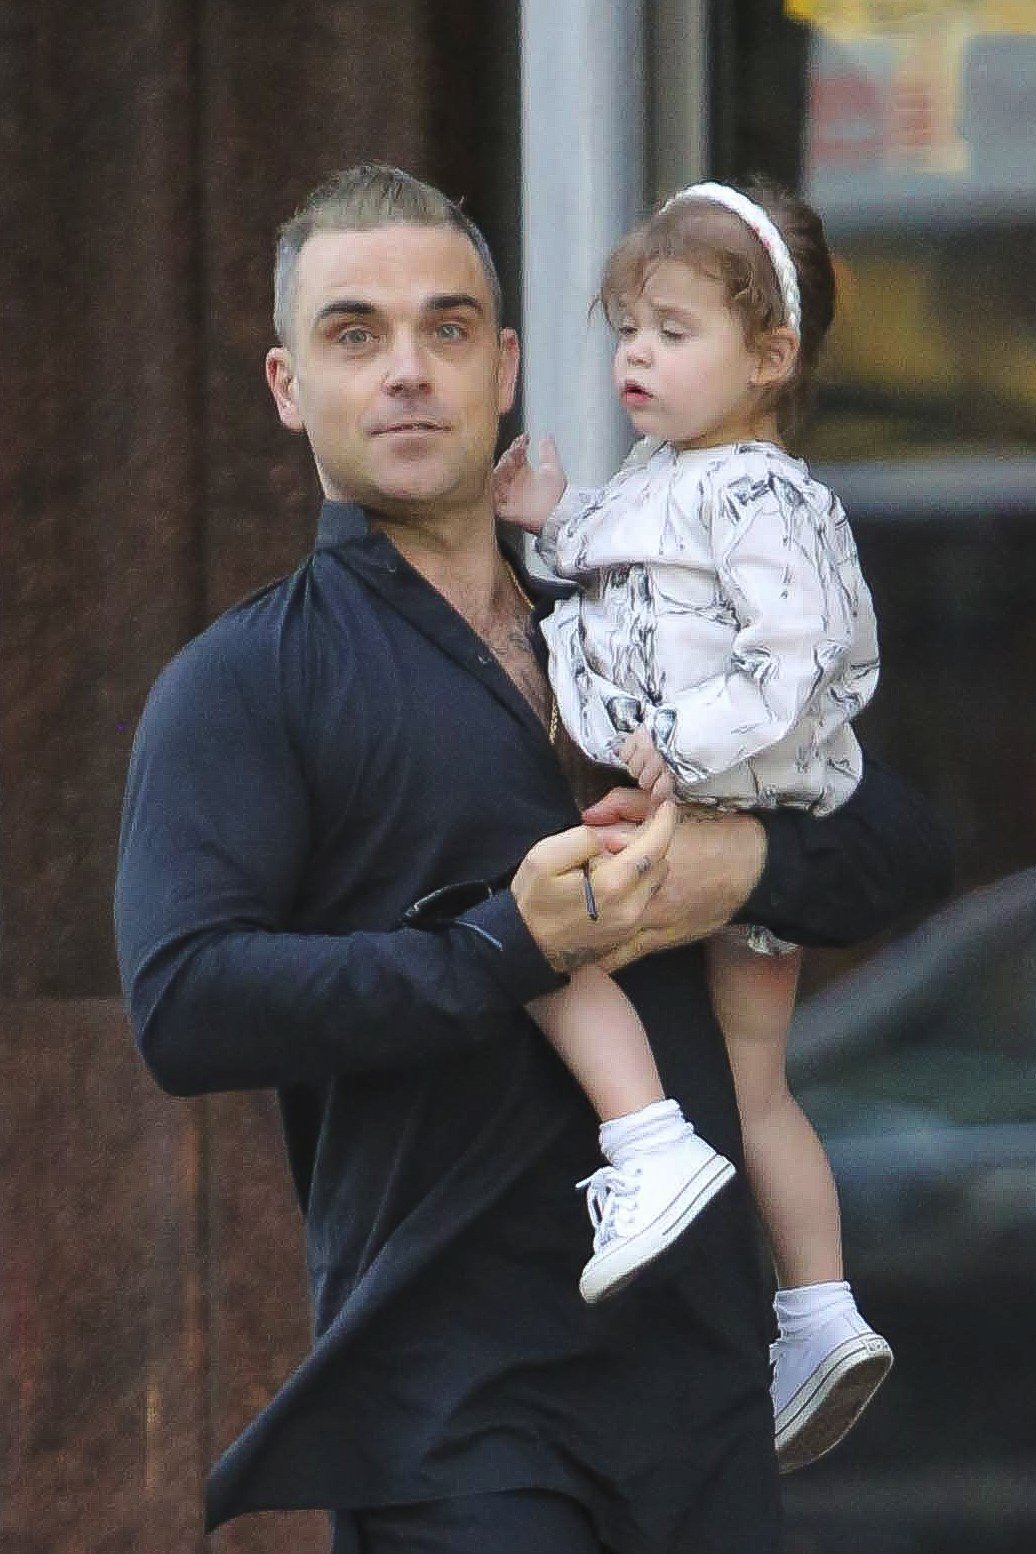 Za družičku půjde i dcera Robbieho Williamse.